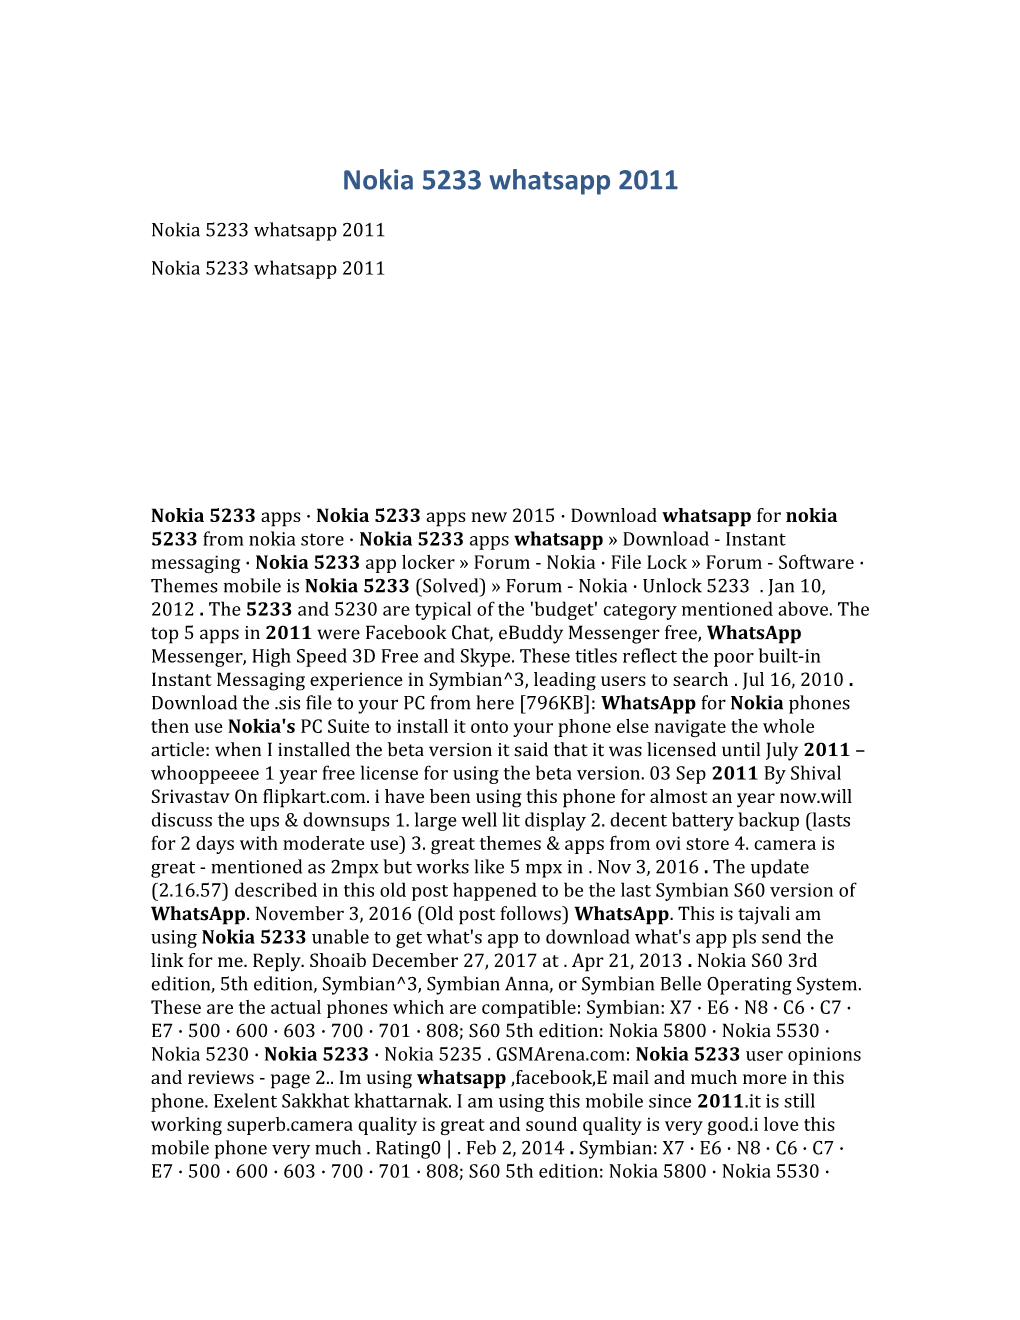 Nokia 5233 Whatsapp 2011